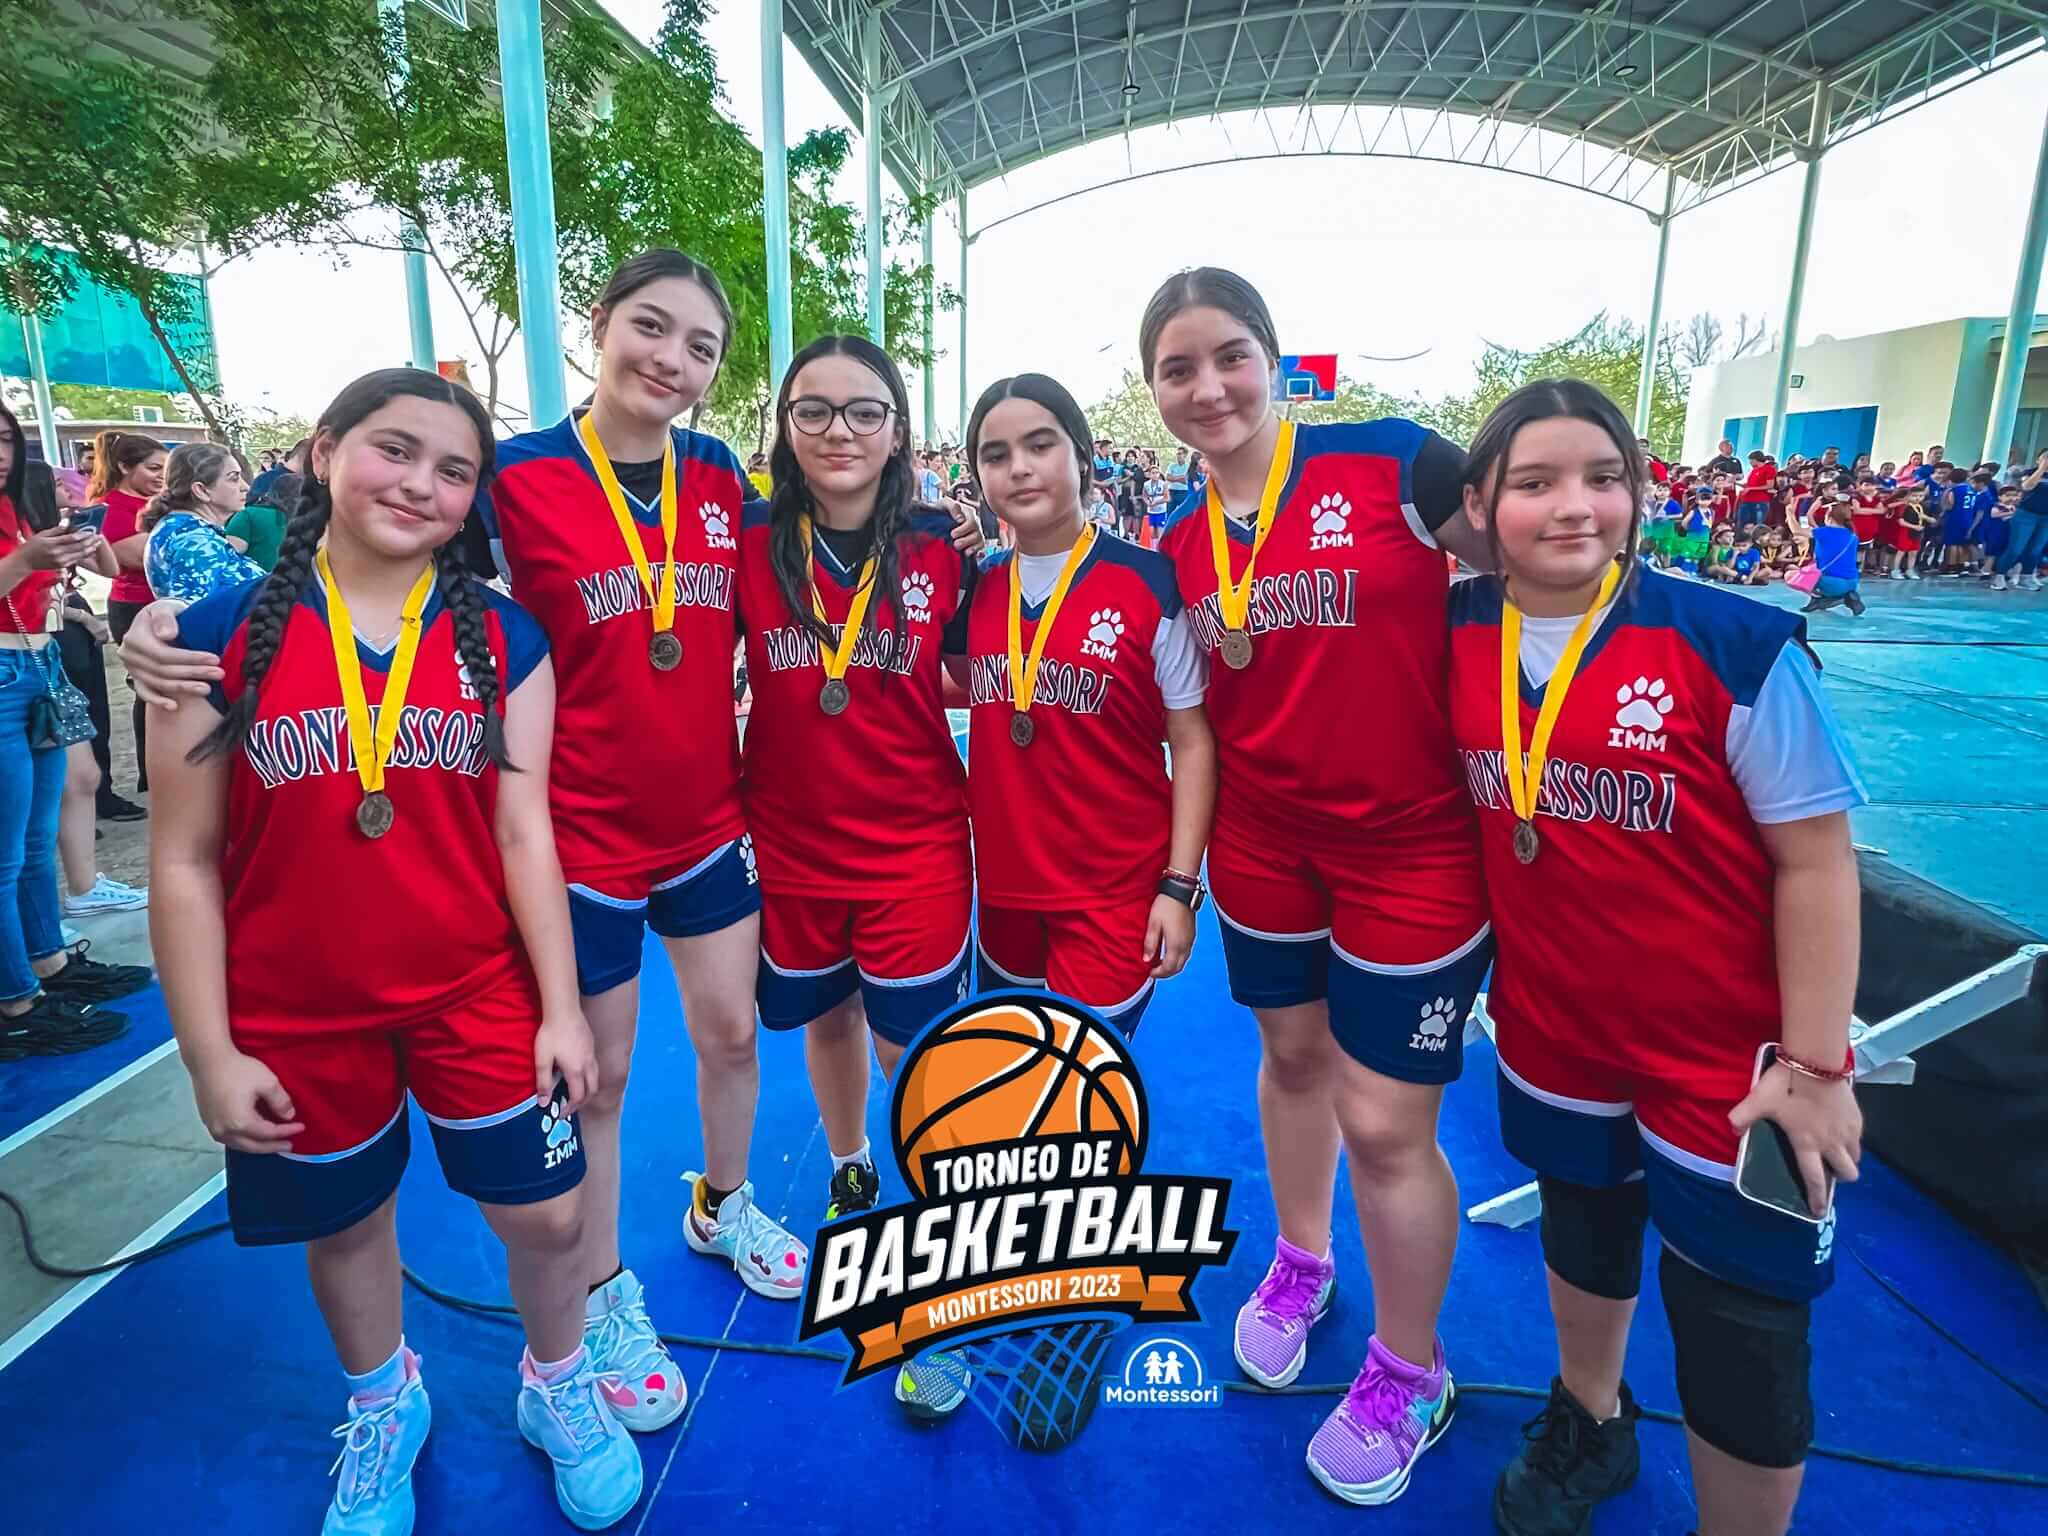 Premiaciones Torneo de Basketball Montessori 2023